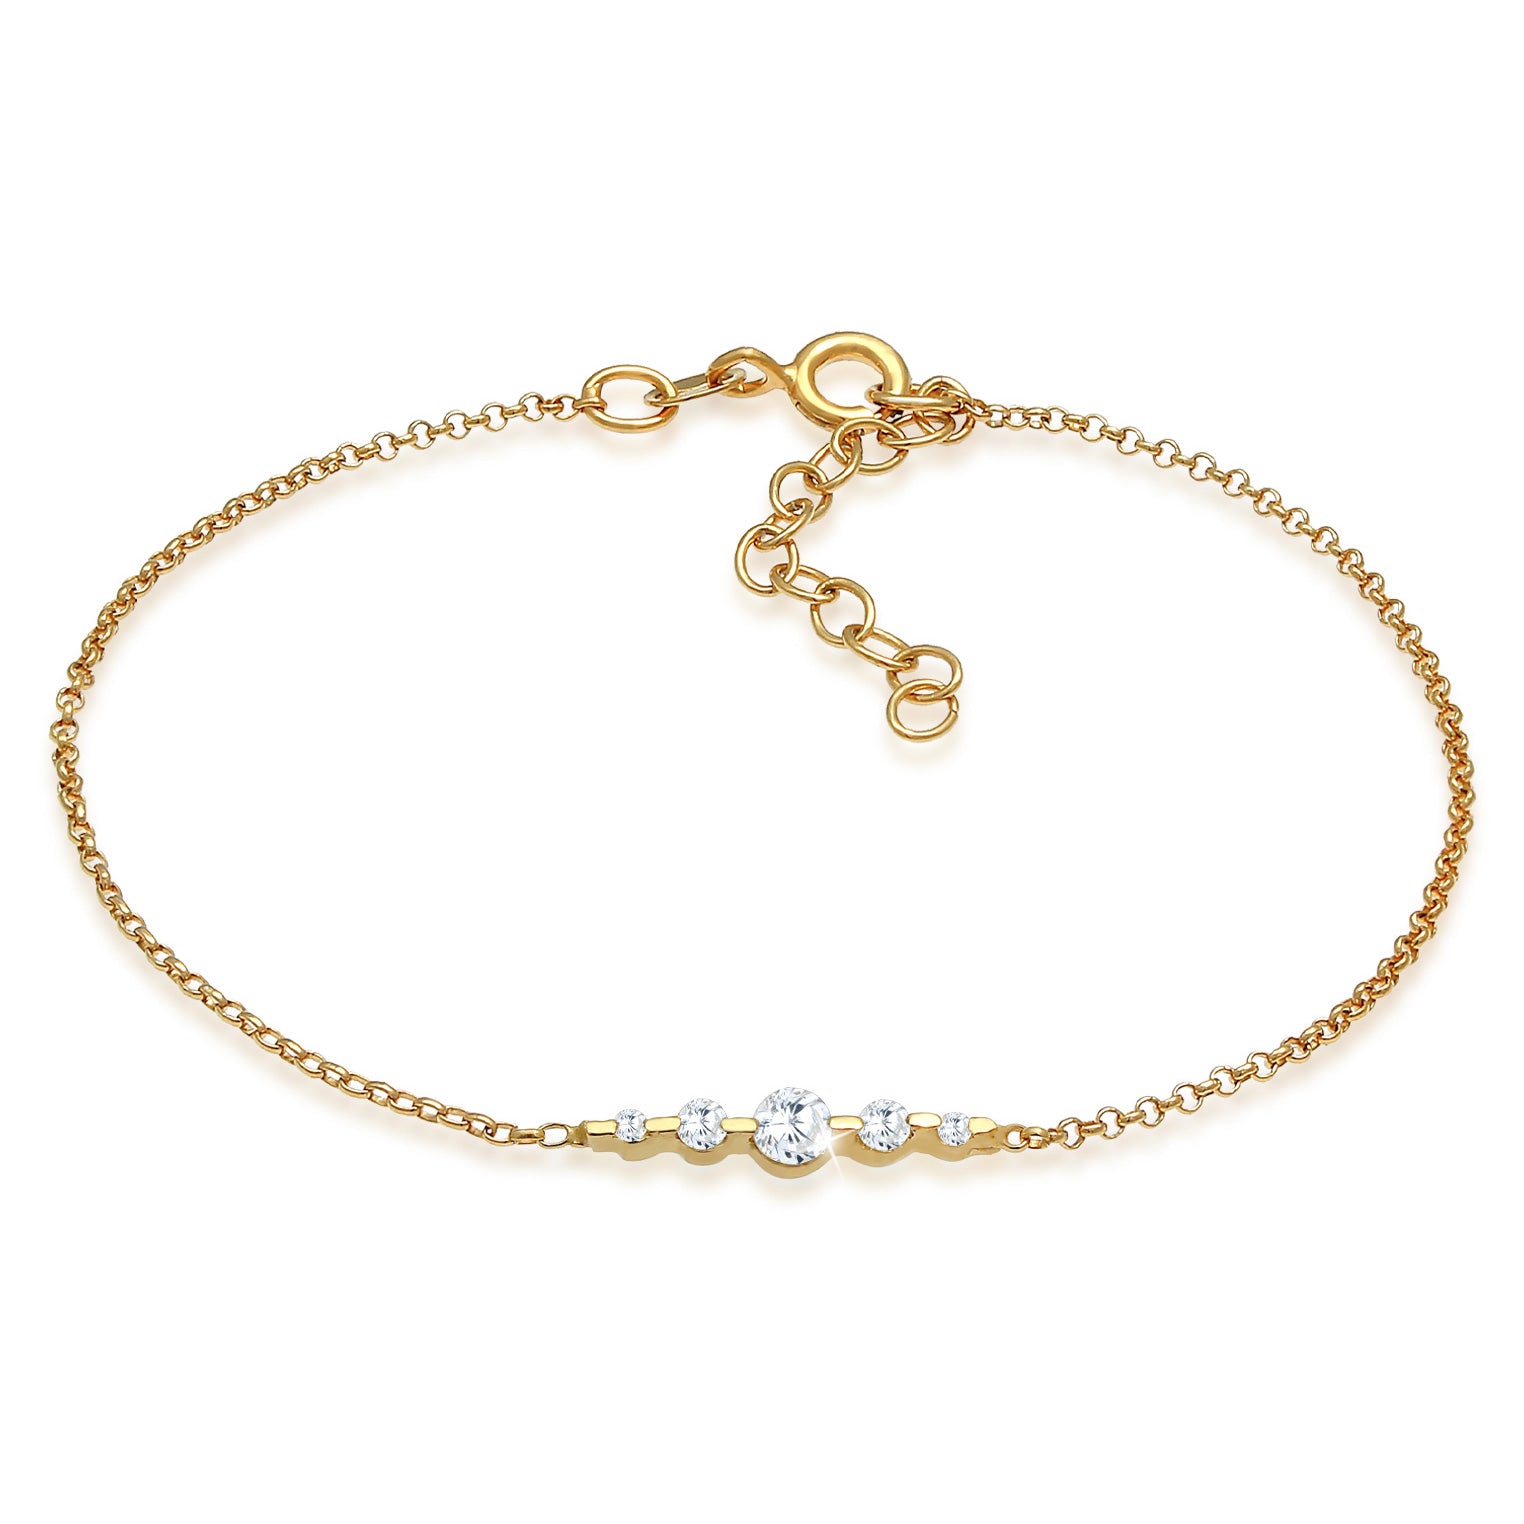 Ladies bracelets with precious stones | discover at Elli – Elli Jewelry